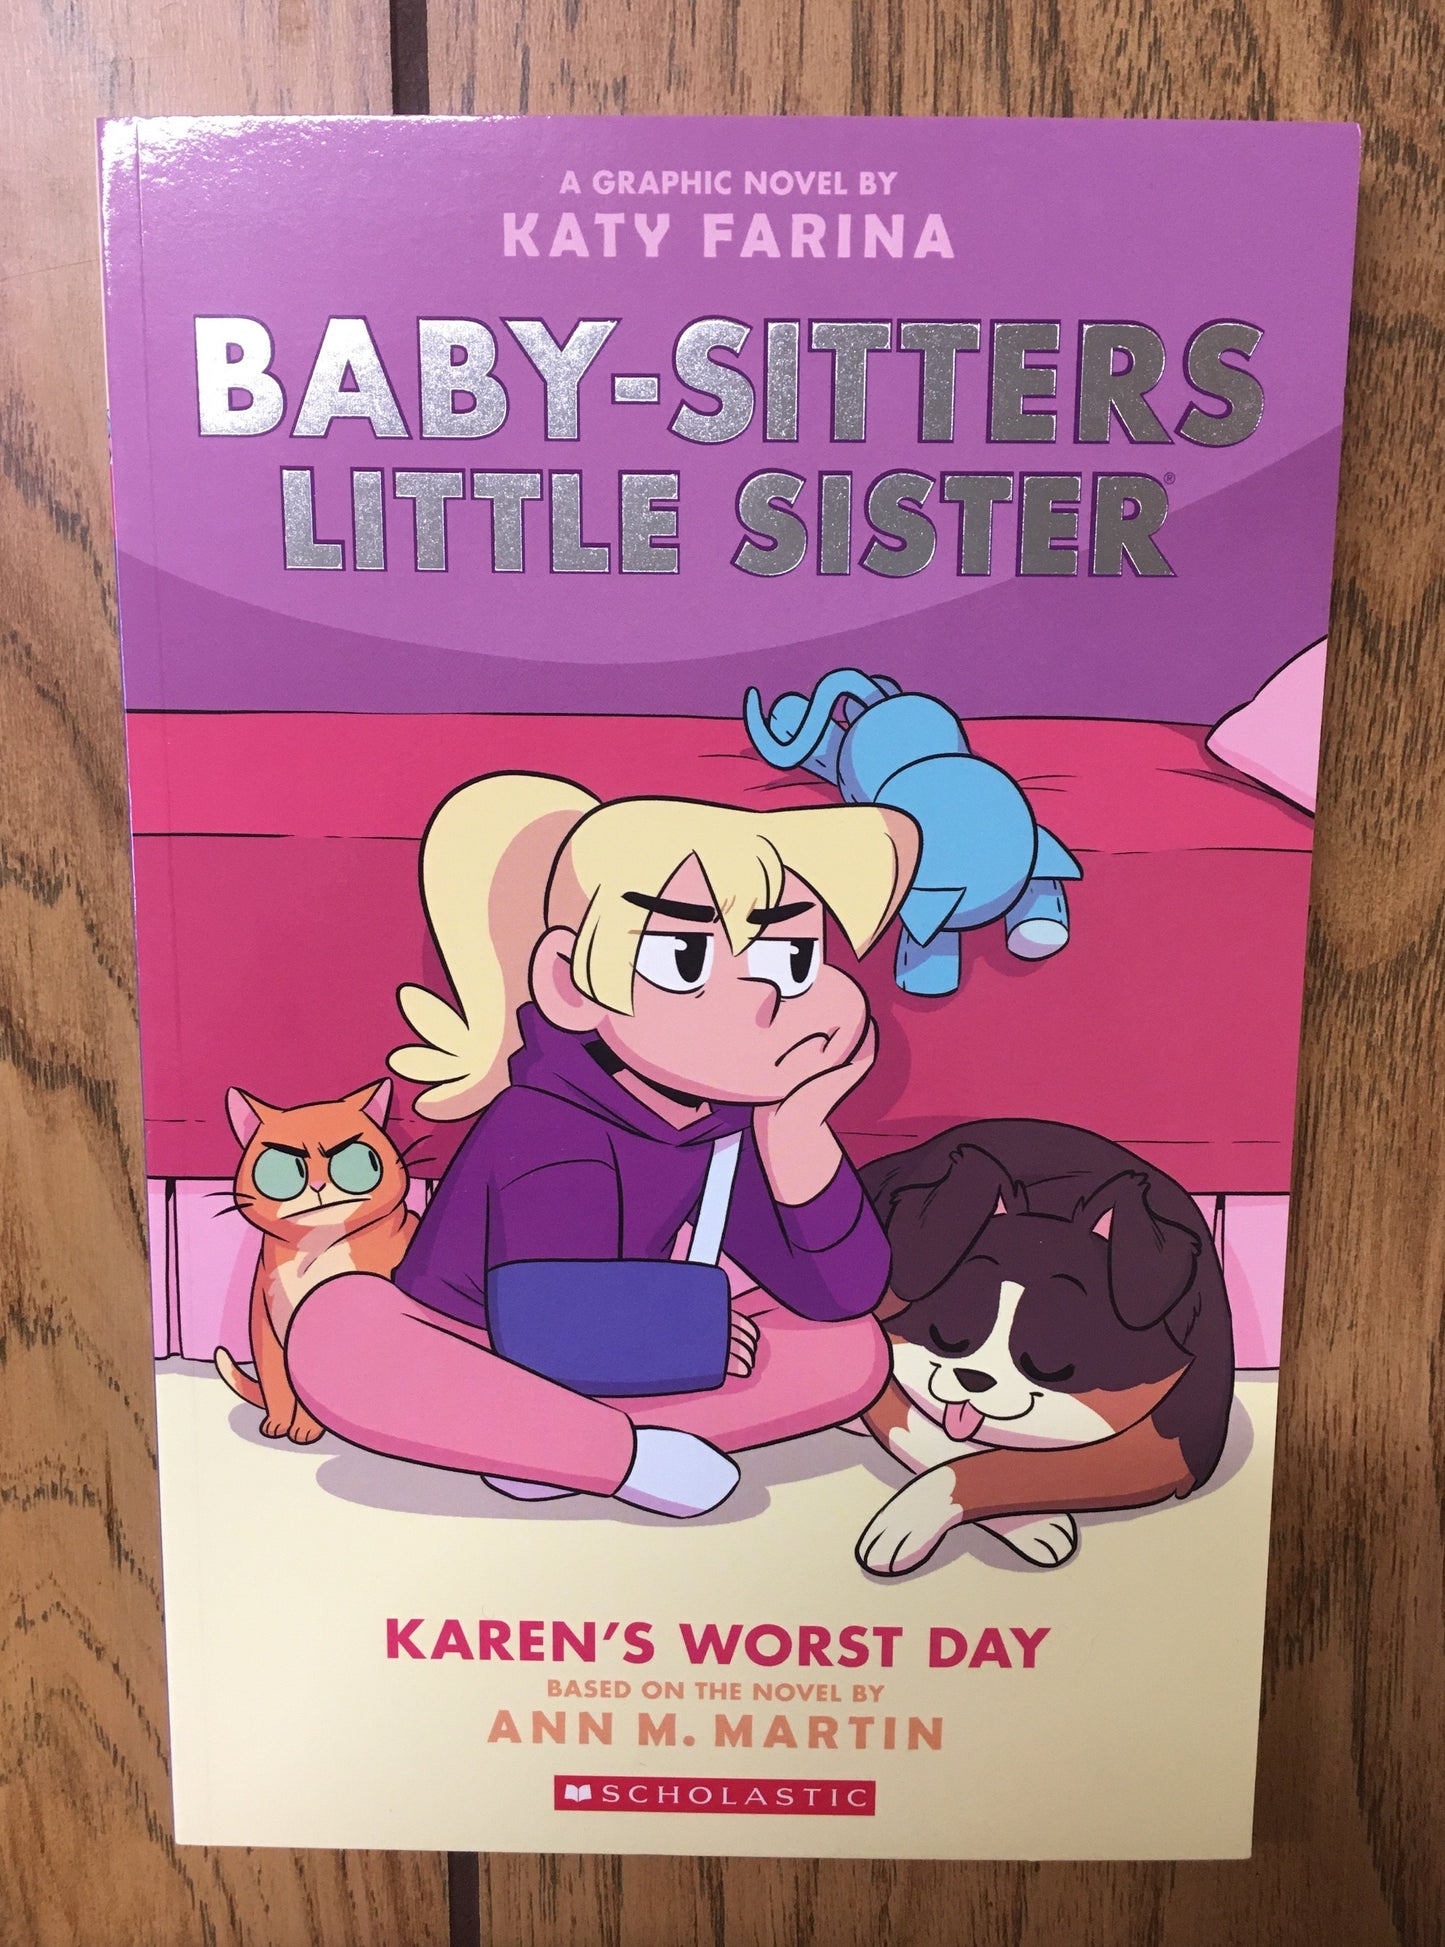 Baby-Sitters Little Sister: Karen's Worst Day (#3)